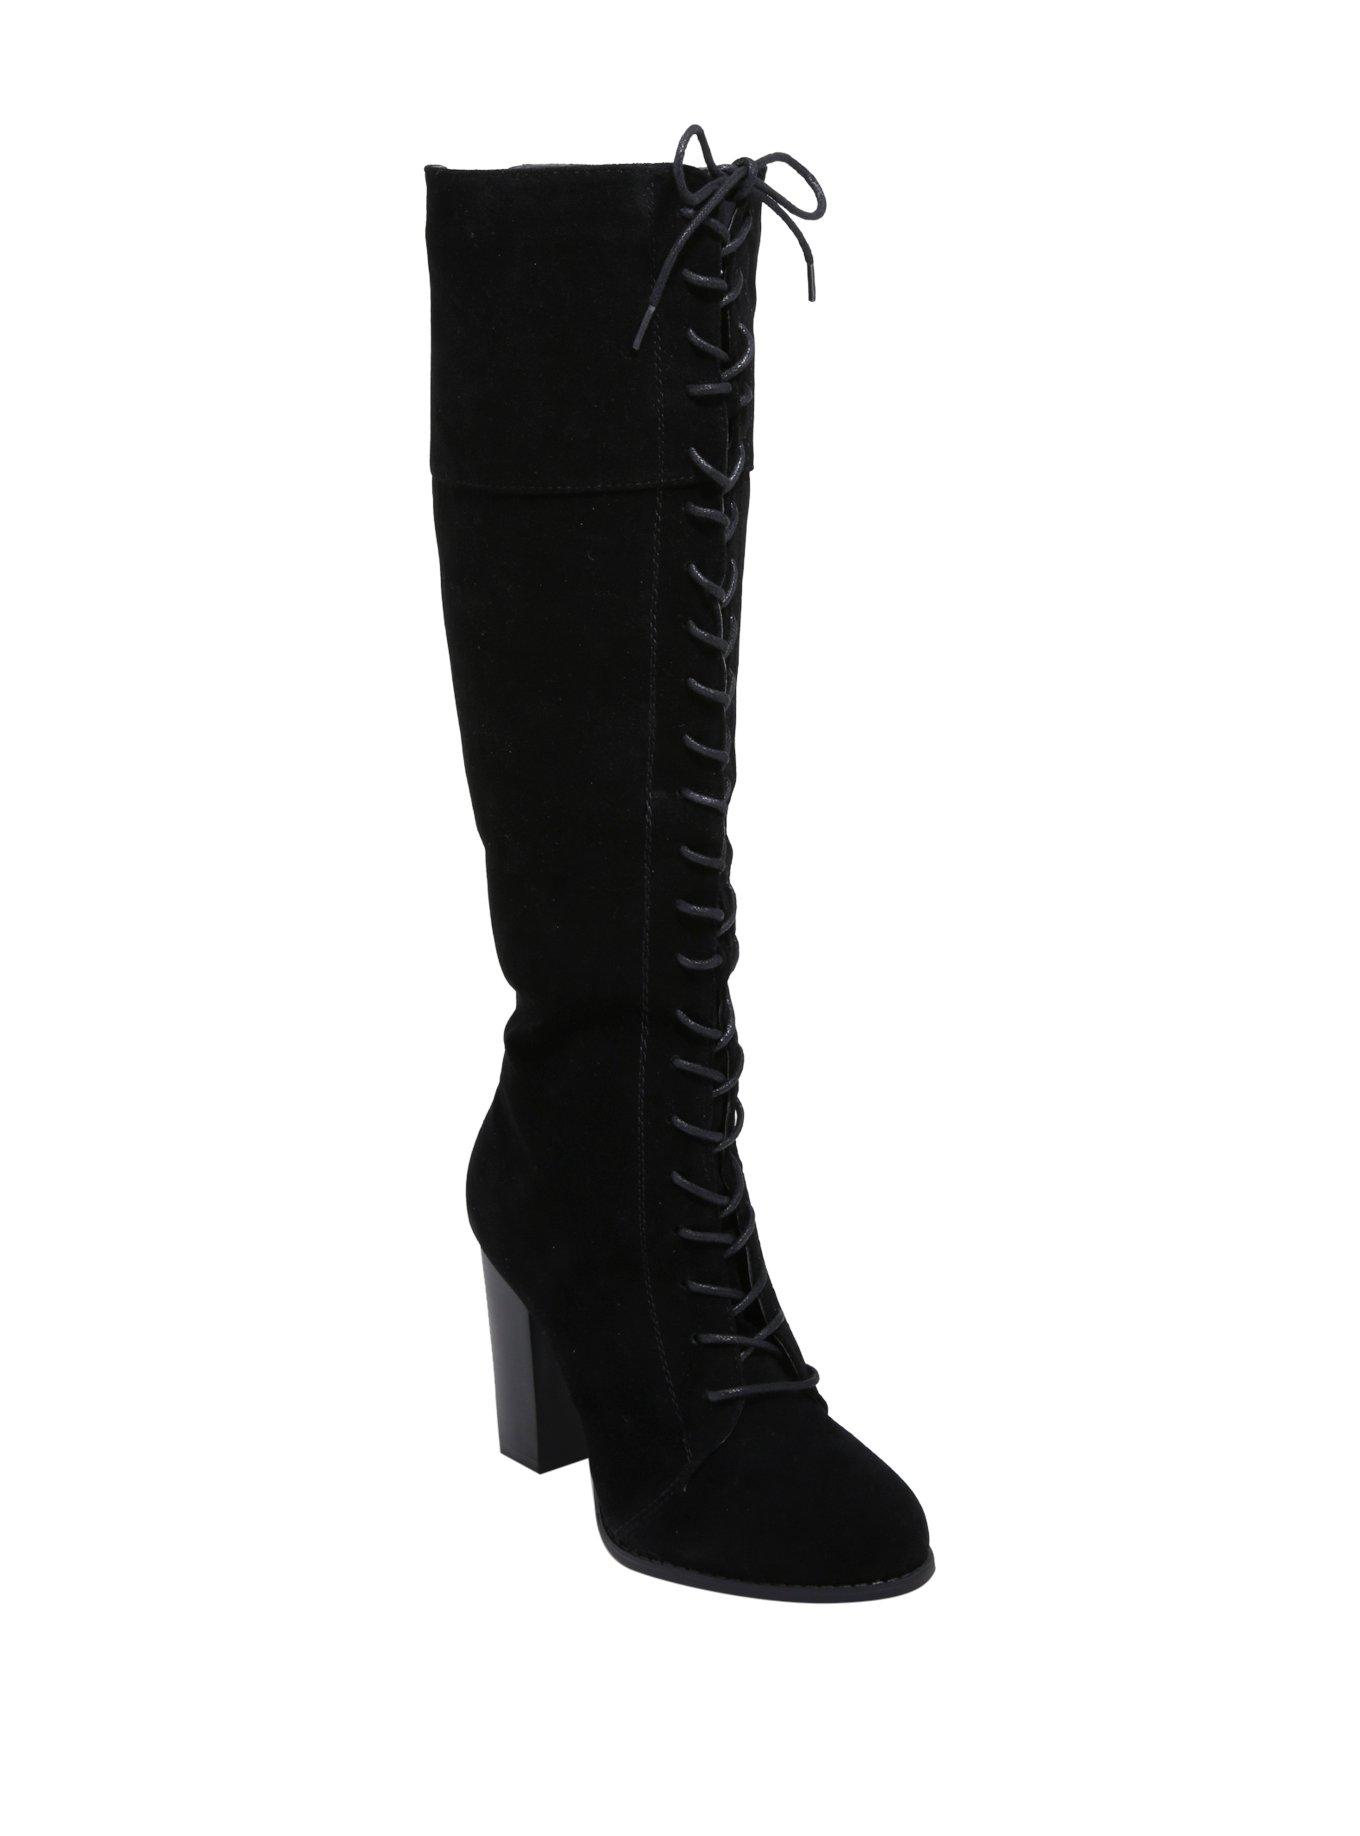 Black Suede Lace-Up Knee High Boots, BLACK, hi-res